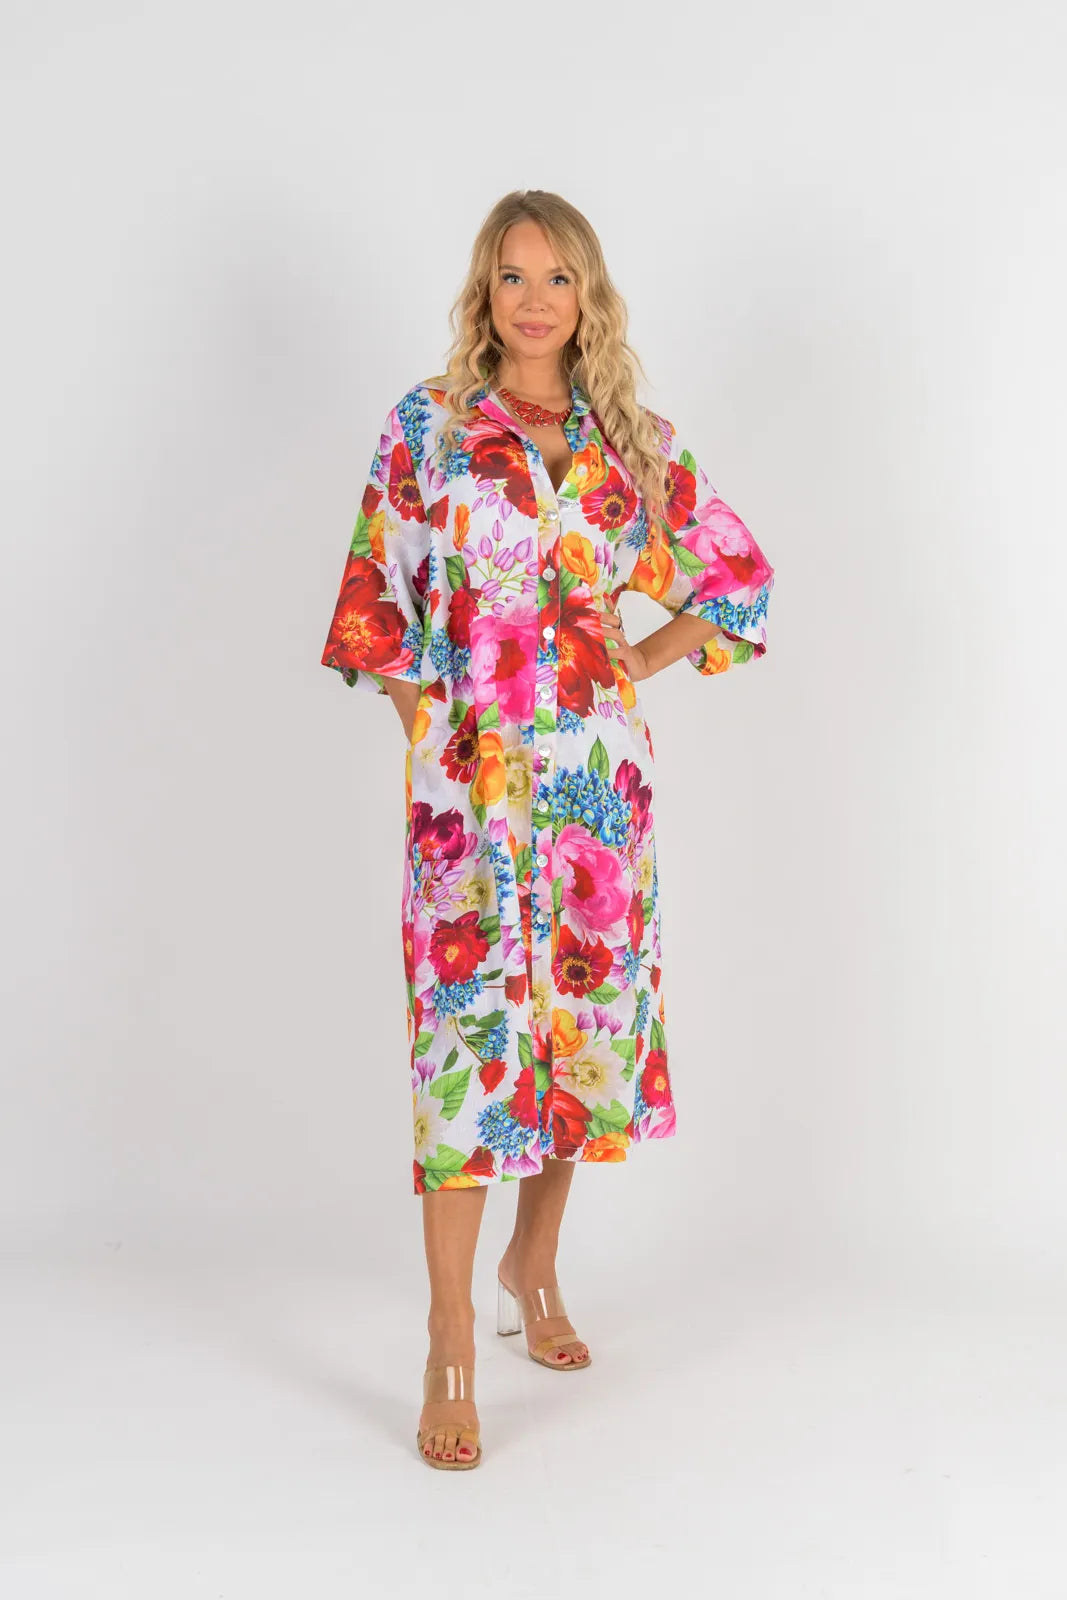 Positano Dress Virginia - Premium  from Marina St. Barth - Just $530.00! Shop now at Marina St Barth